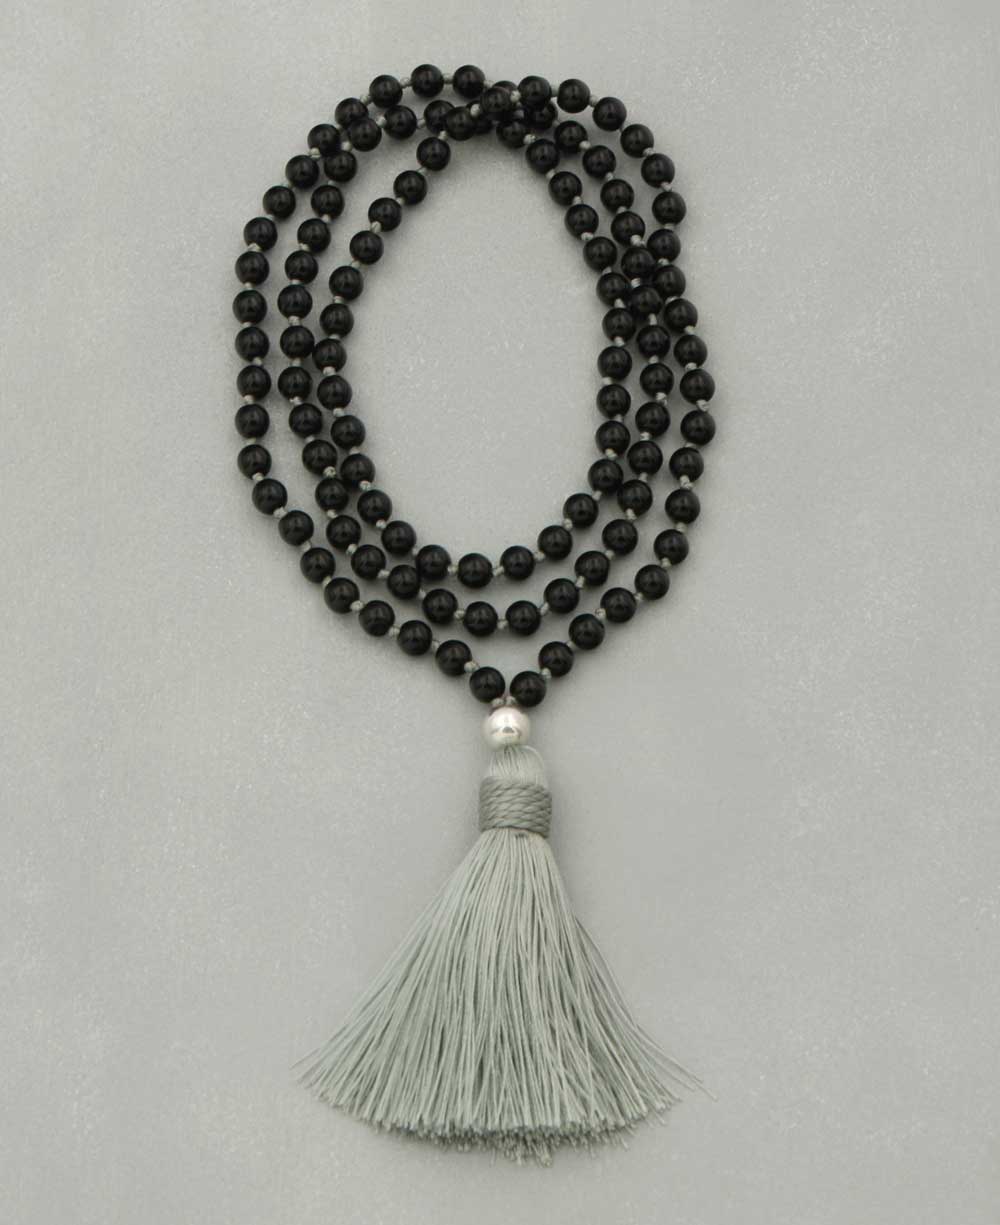 Knotted Black Onyx Mala with Sterling Guru Bead - Prayer Beads